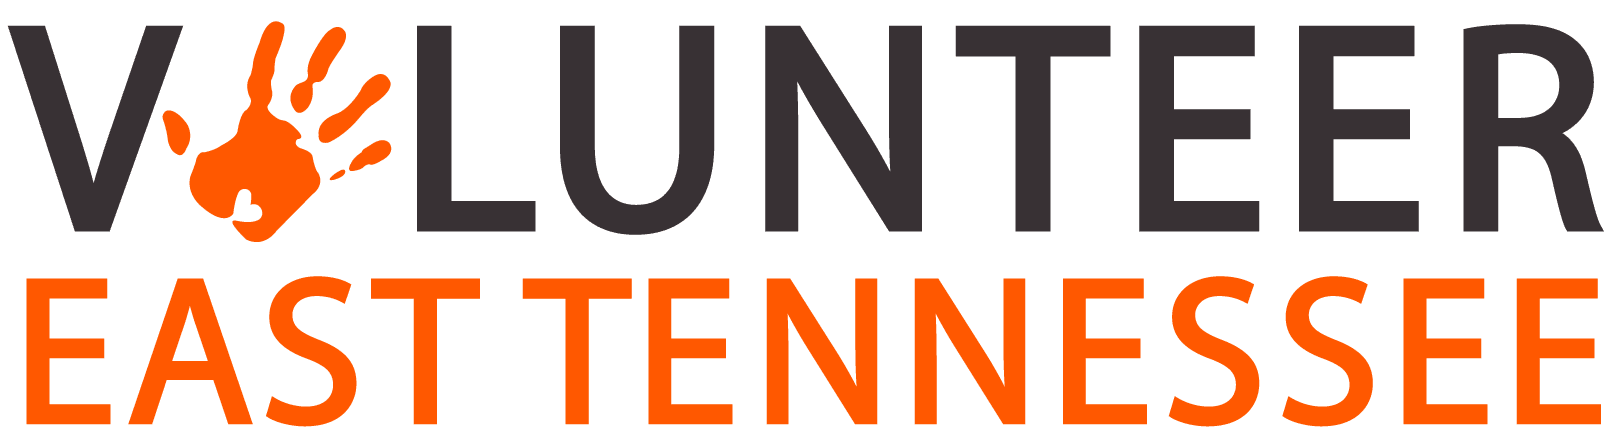 Volunteer East Tennessee logo